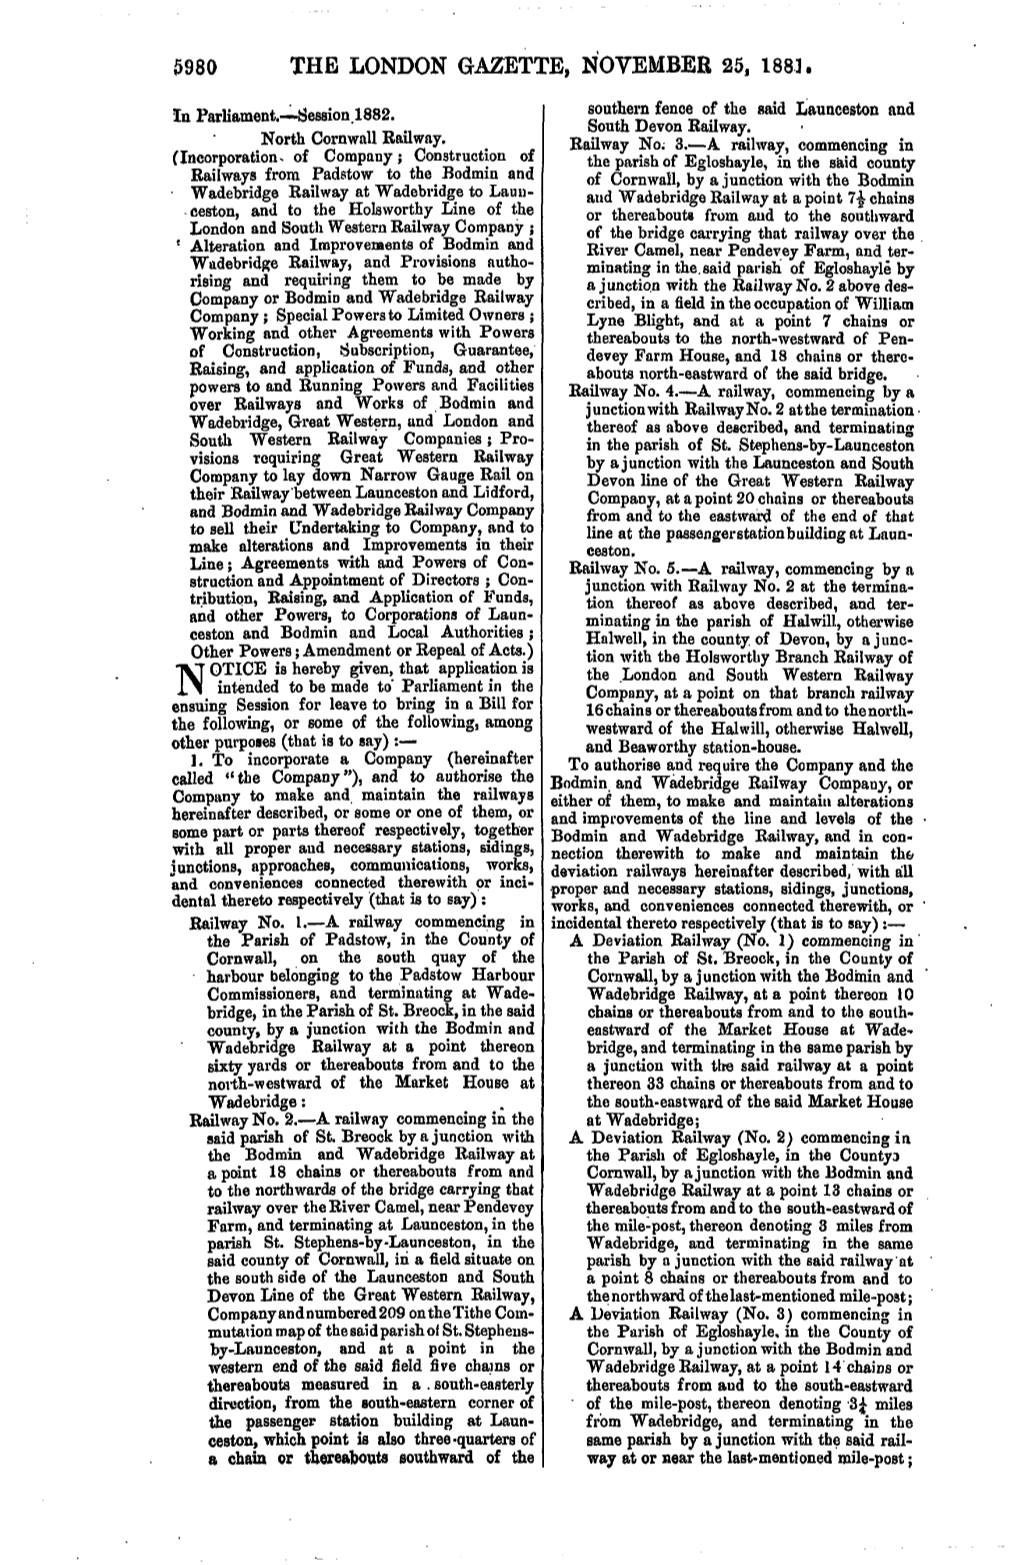 The London Gazette, November 25, 1881